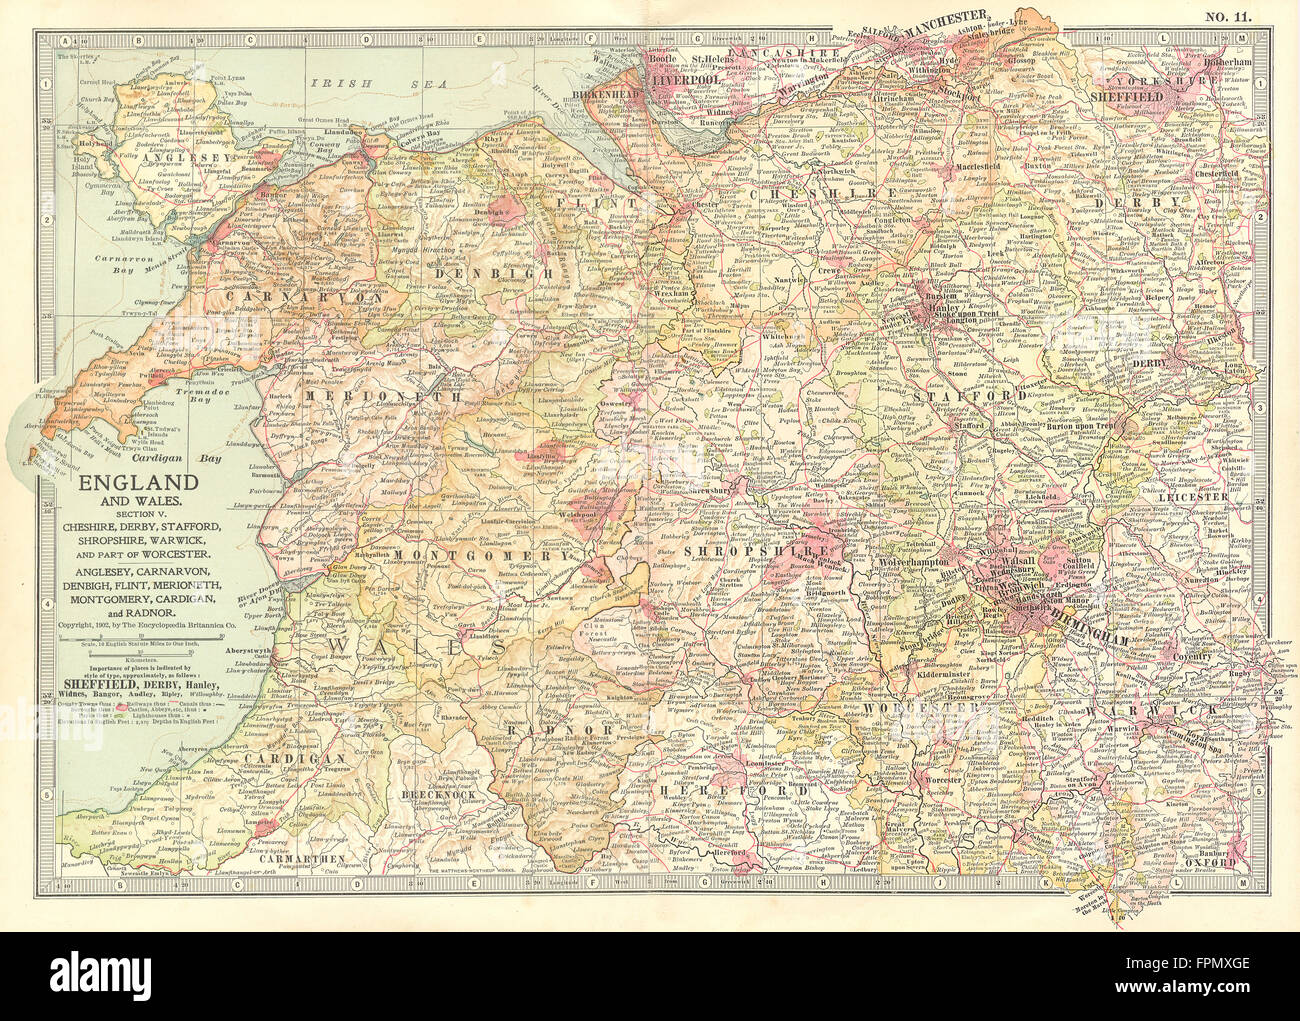 NORTH WALES WEST MIDLANDS: Cheshire Derbyshire Staffordshire Shrops, 1903 map Stock Photo